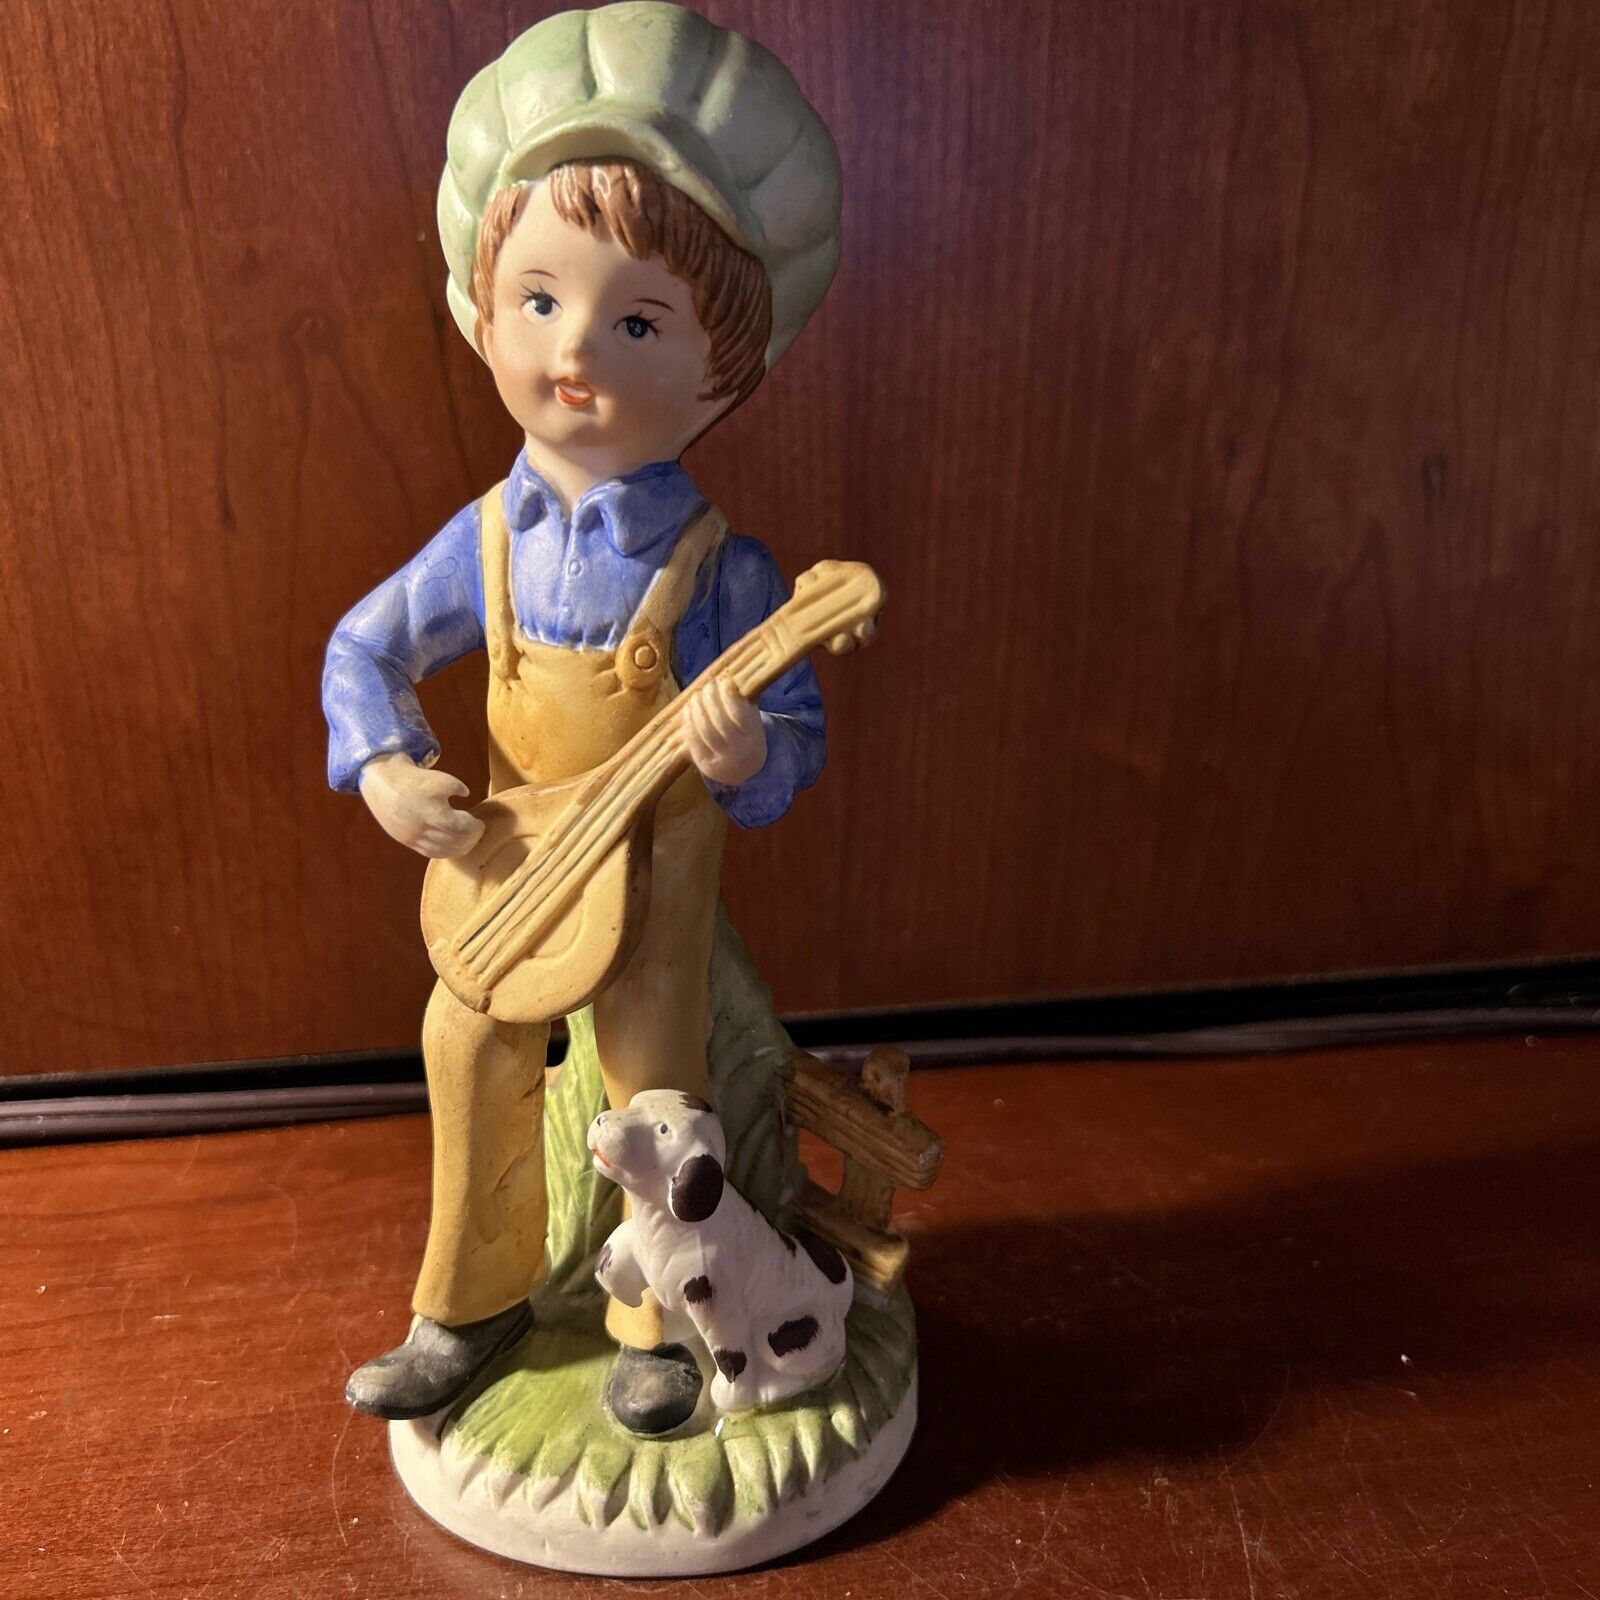 Vintage Glazed Porcelain Boy Playing Banjo with Dog Figurine